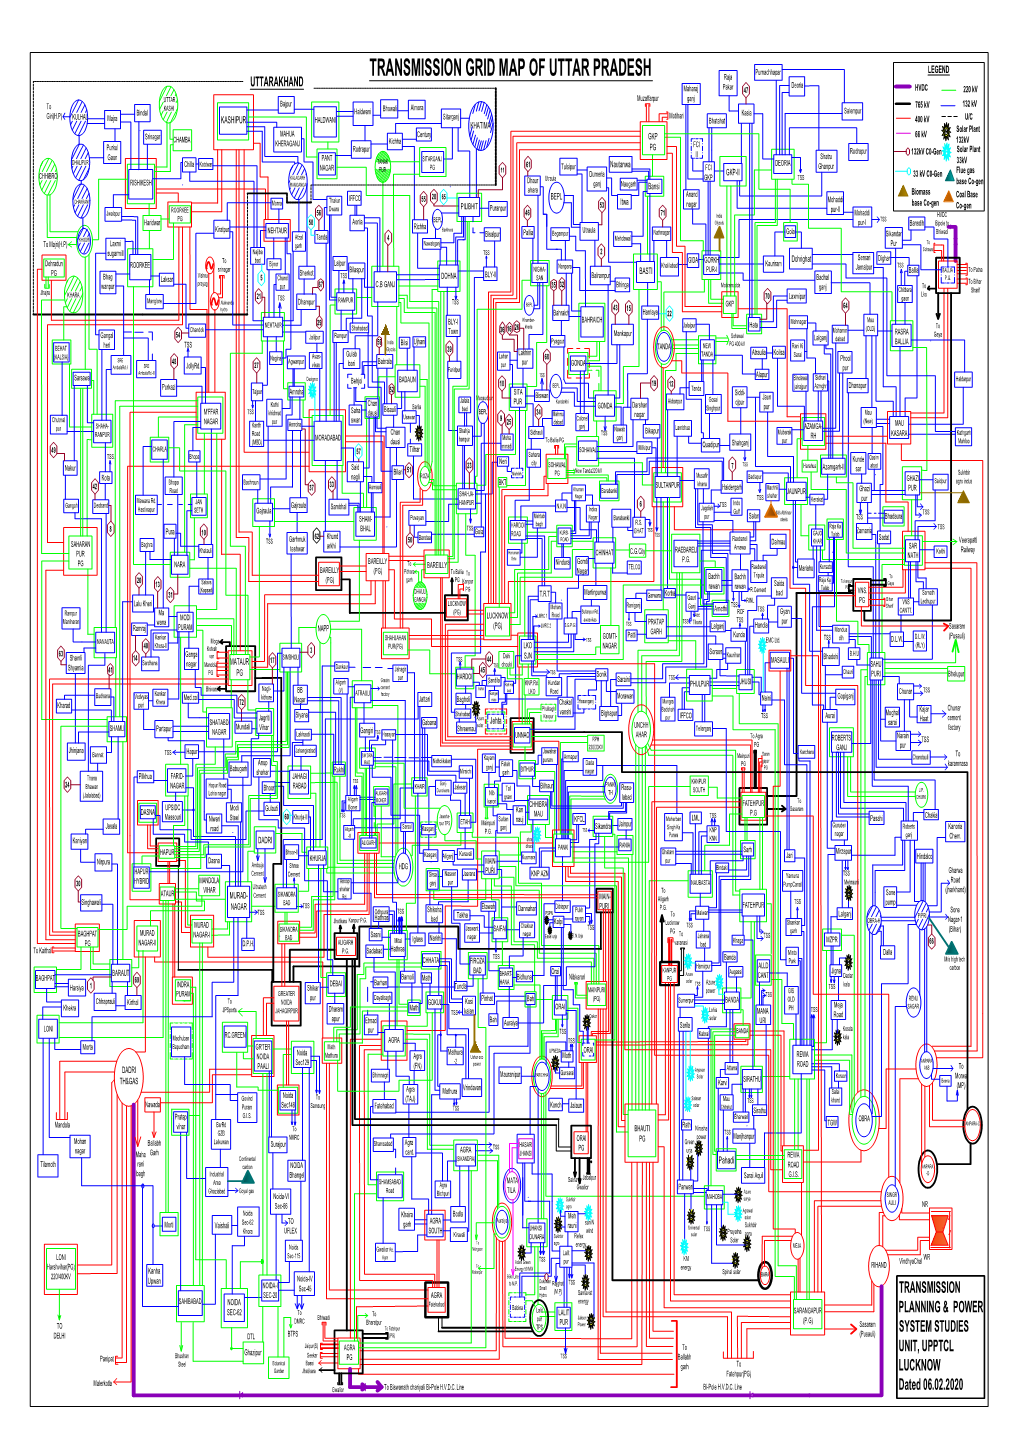 C:\Users\DELL\Desktop\Maps\Grid Map Latest Model